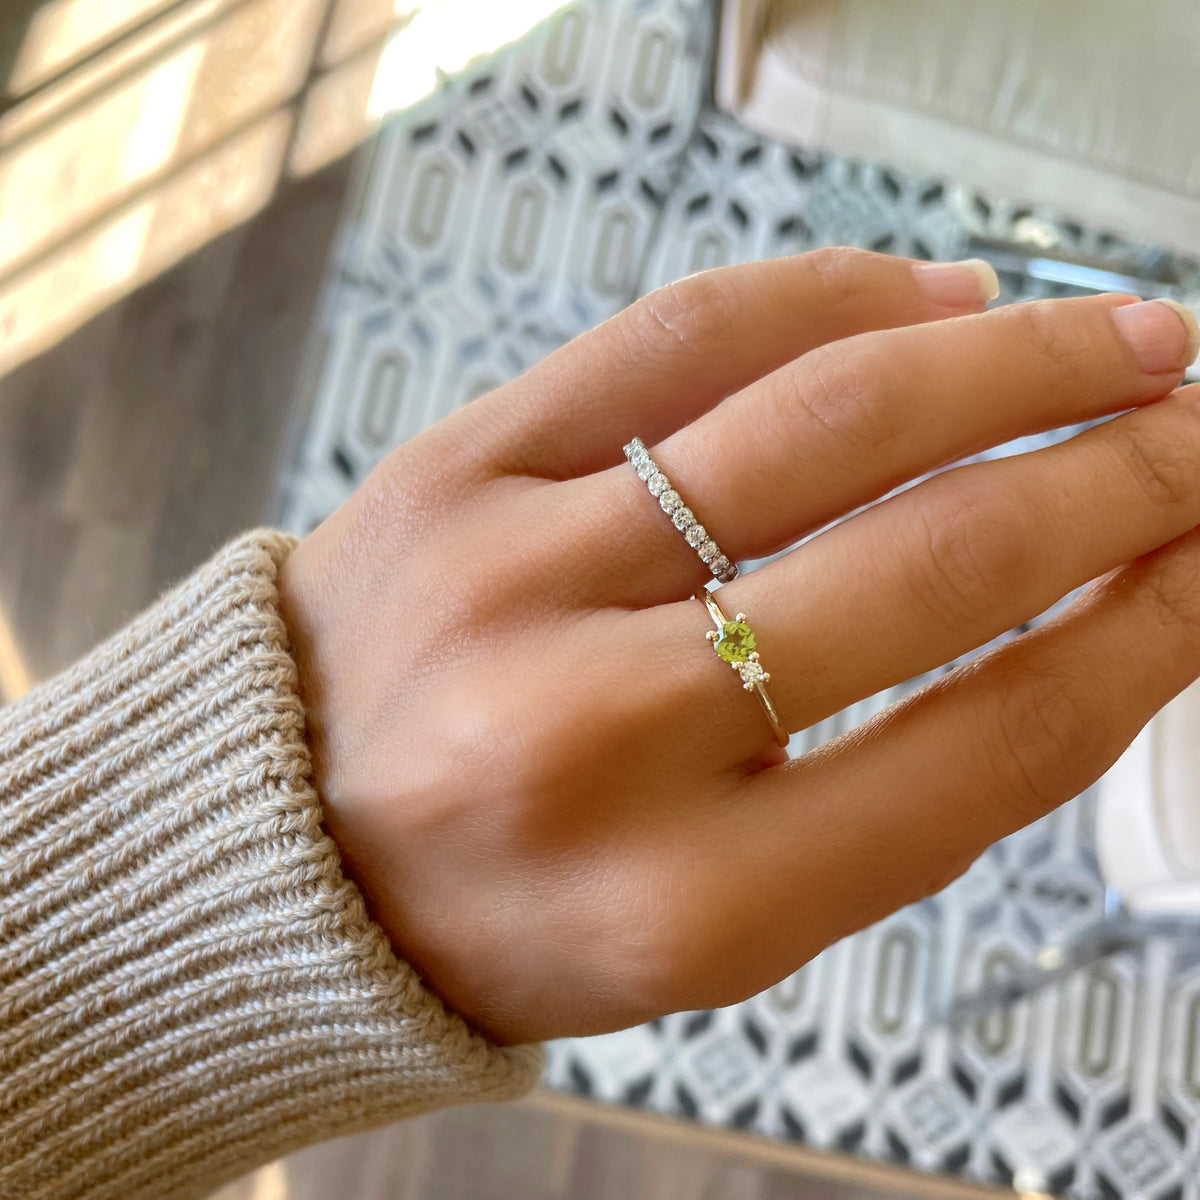 Prana Ring in Silver | Buy online jewelry at MeriTomasa